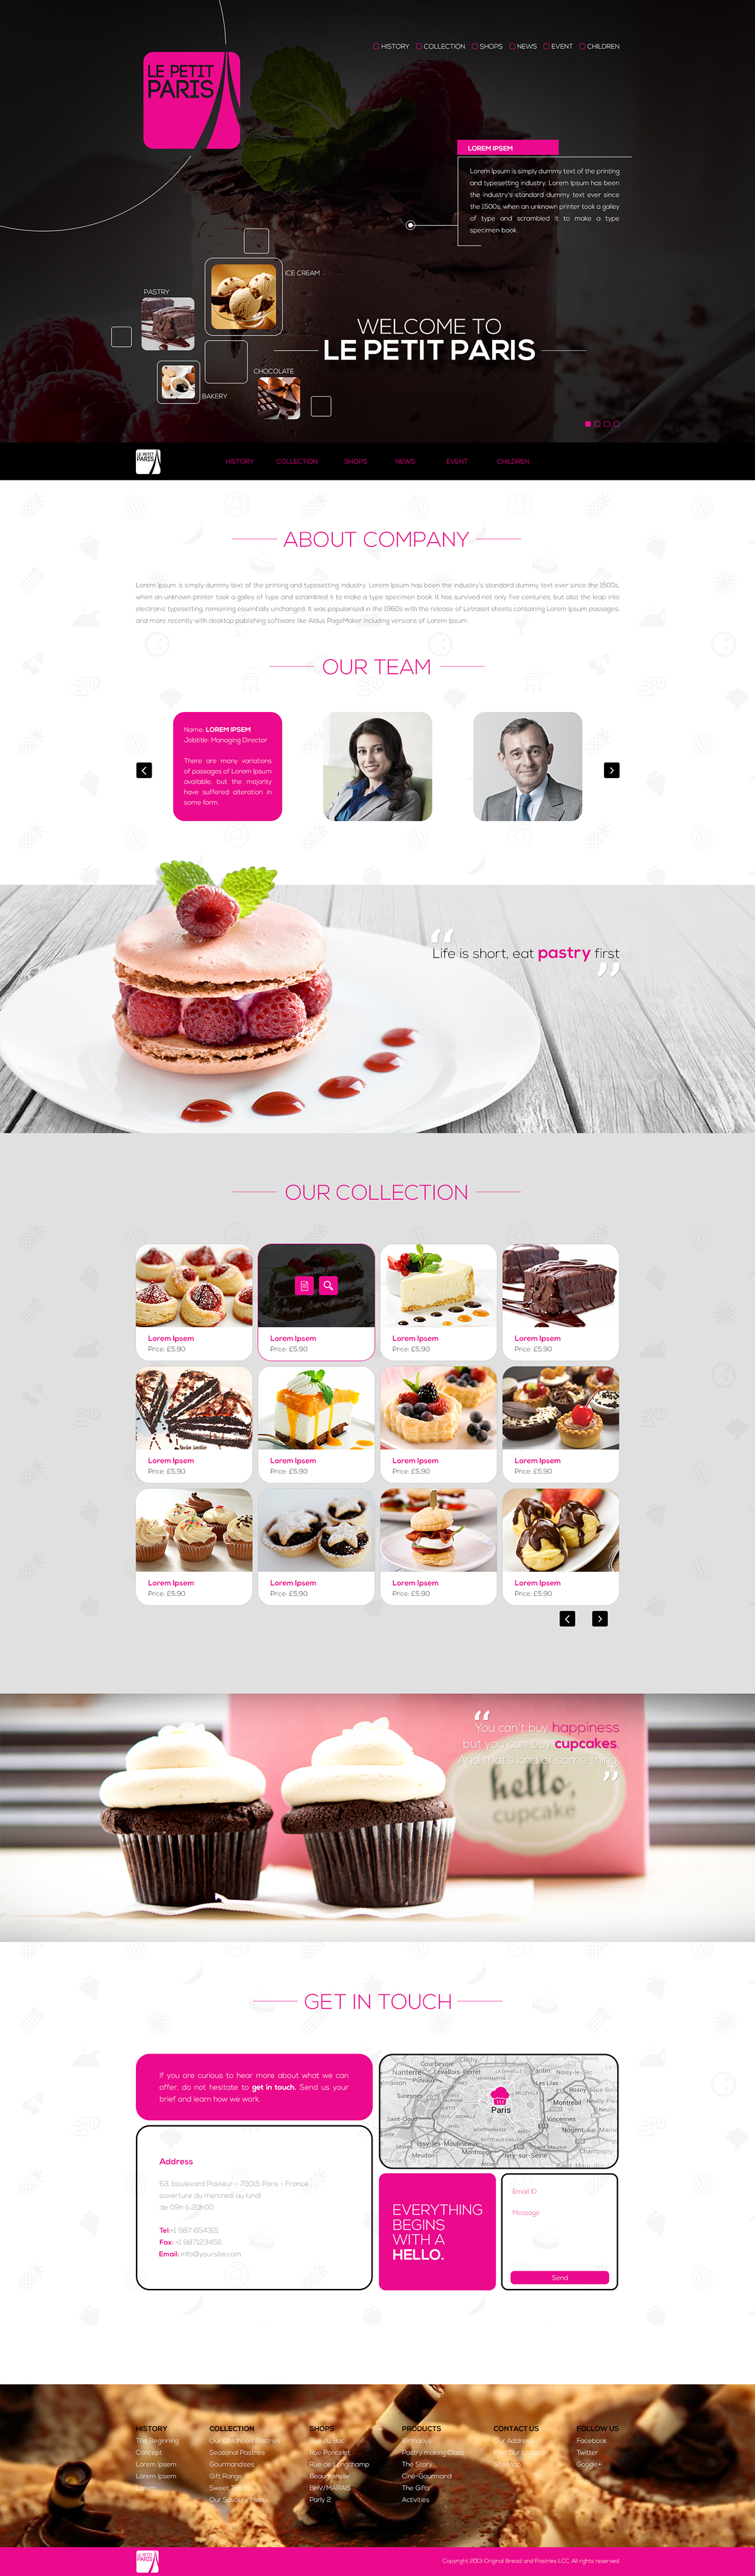 le petit Paris pastery bakery chocolate ice cream Website design